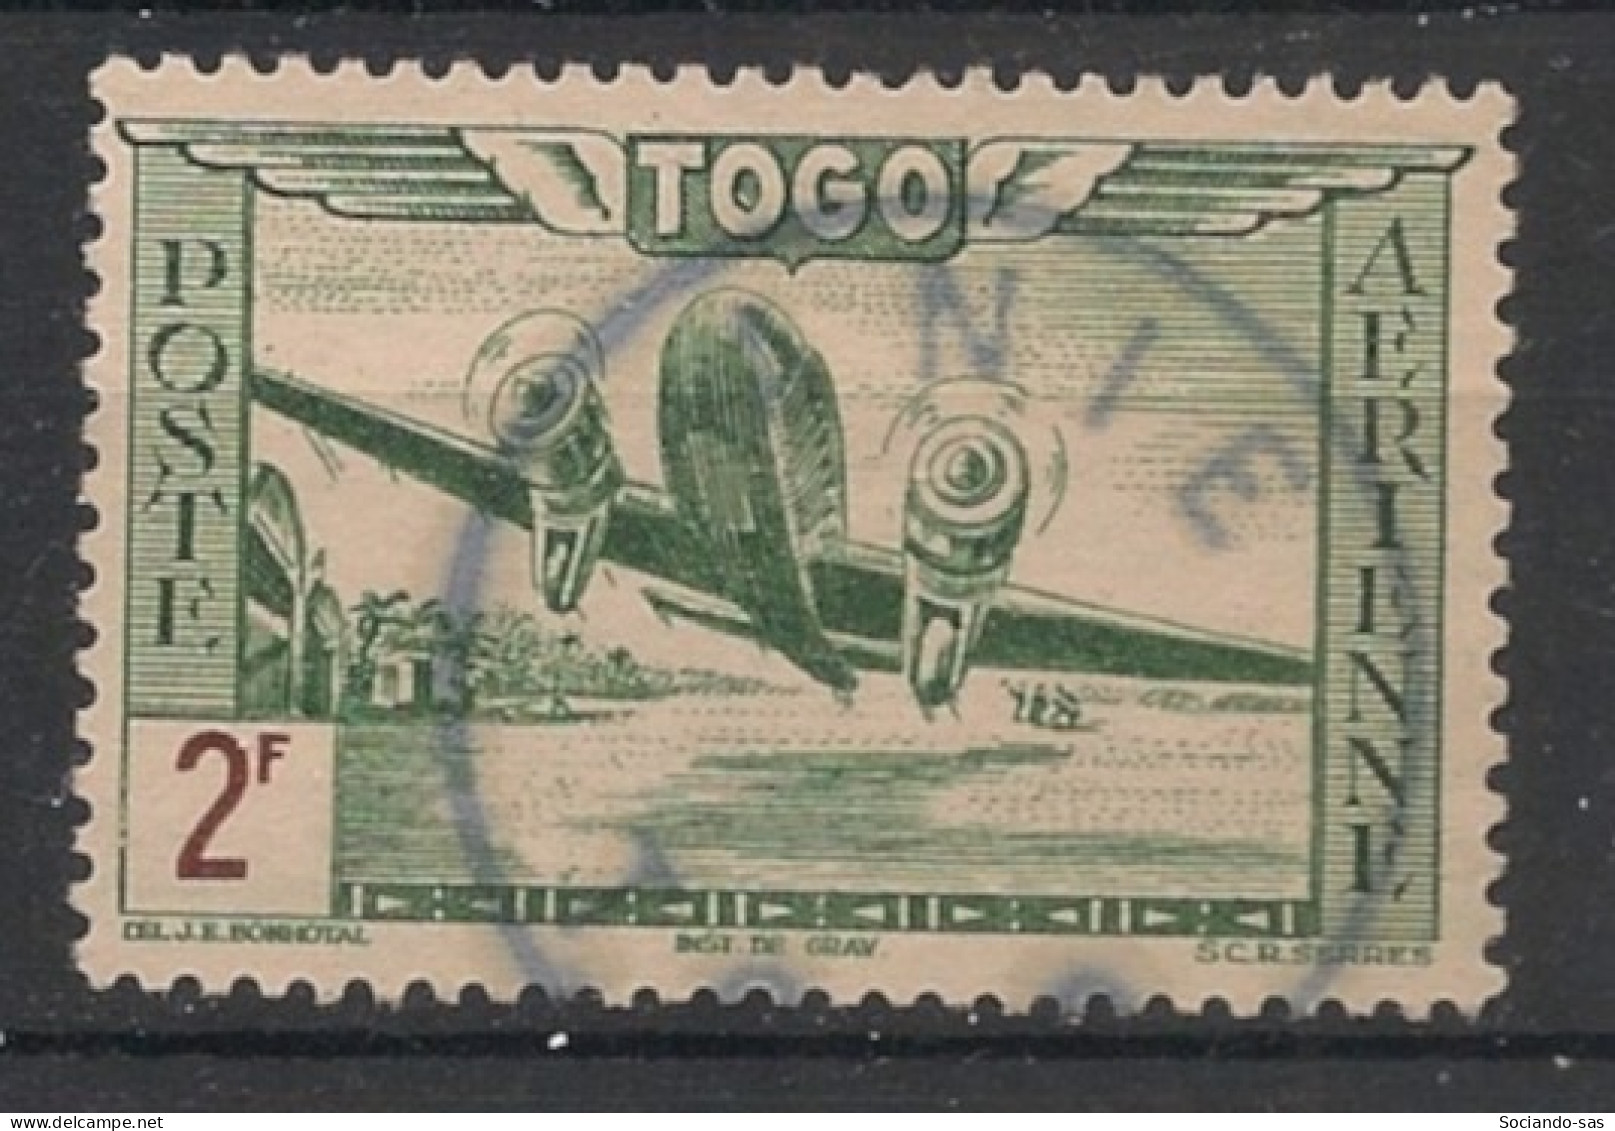 TOGO - 1942 - Poste Aérienne PA N°YT. 11 - Avion 2f - Oblitéré / Used - Gebruikt